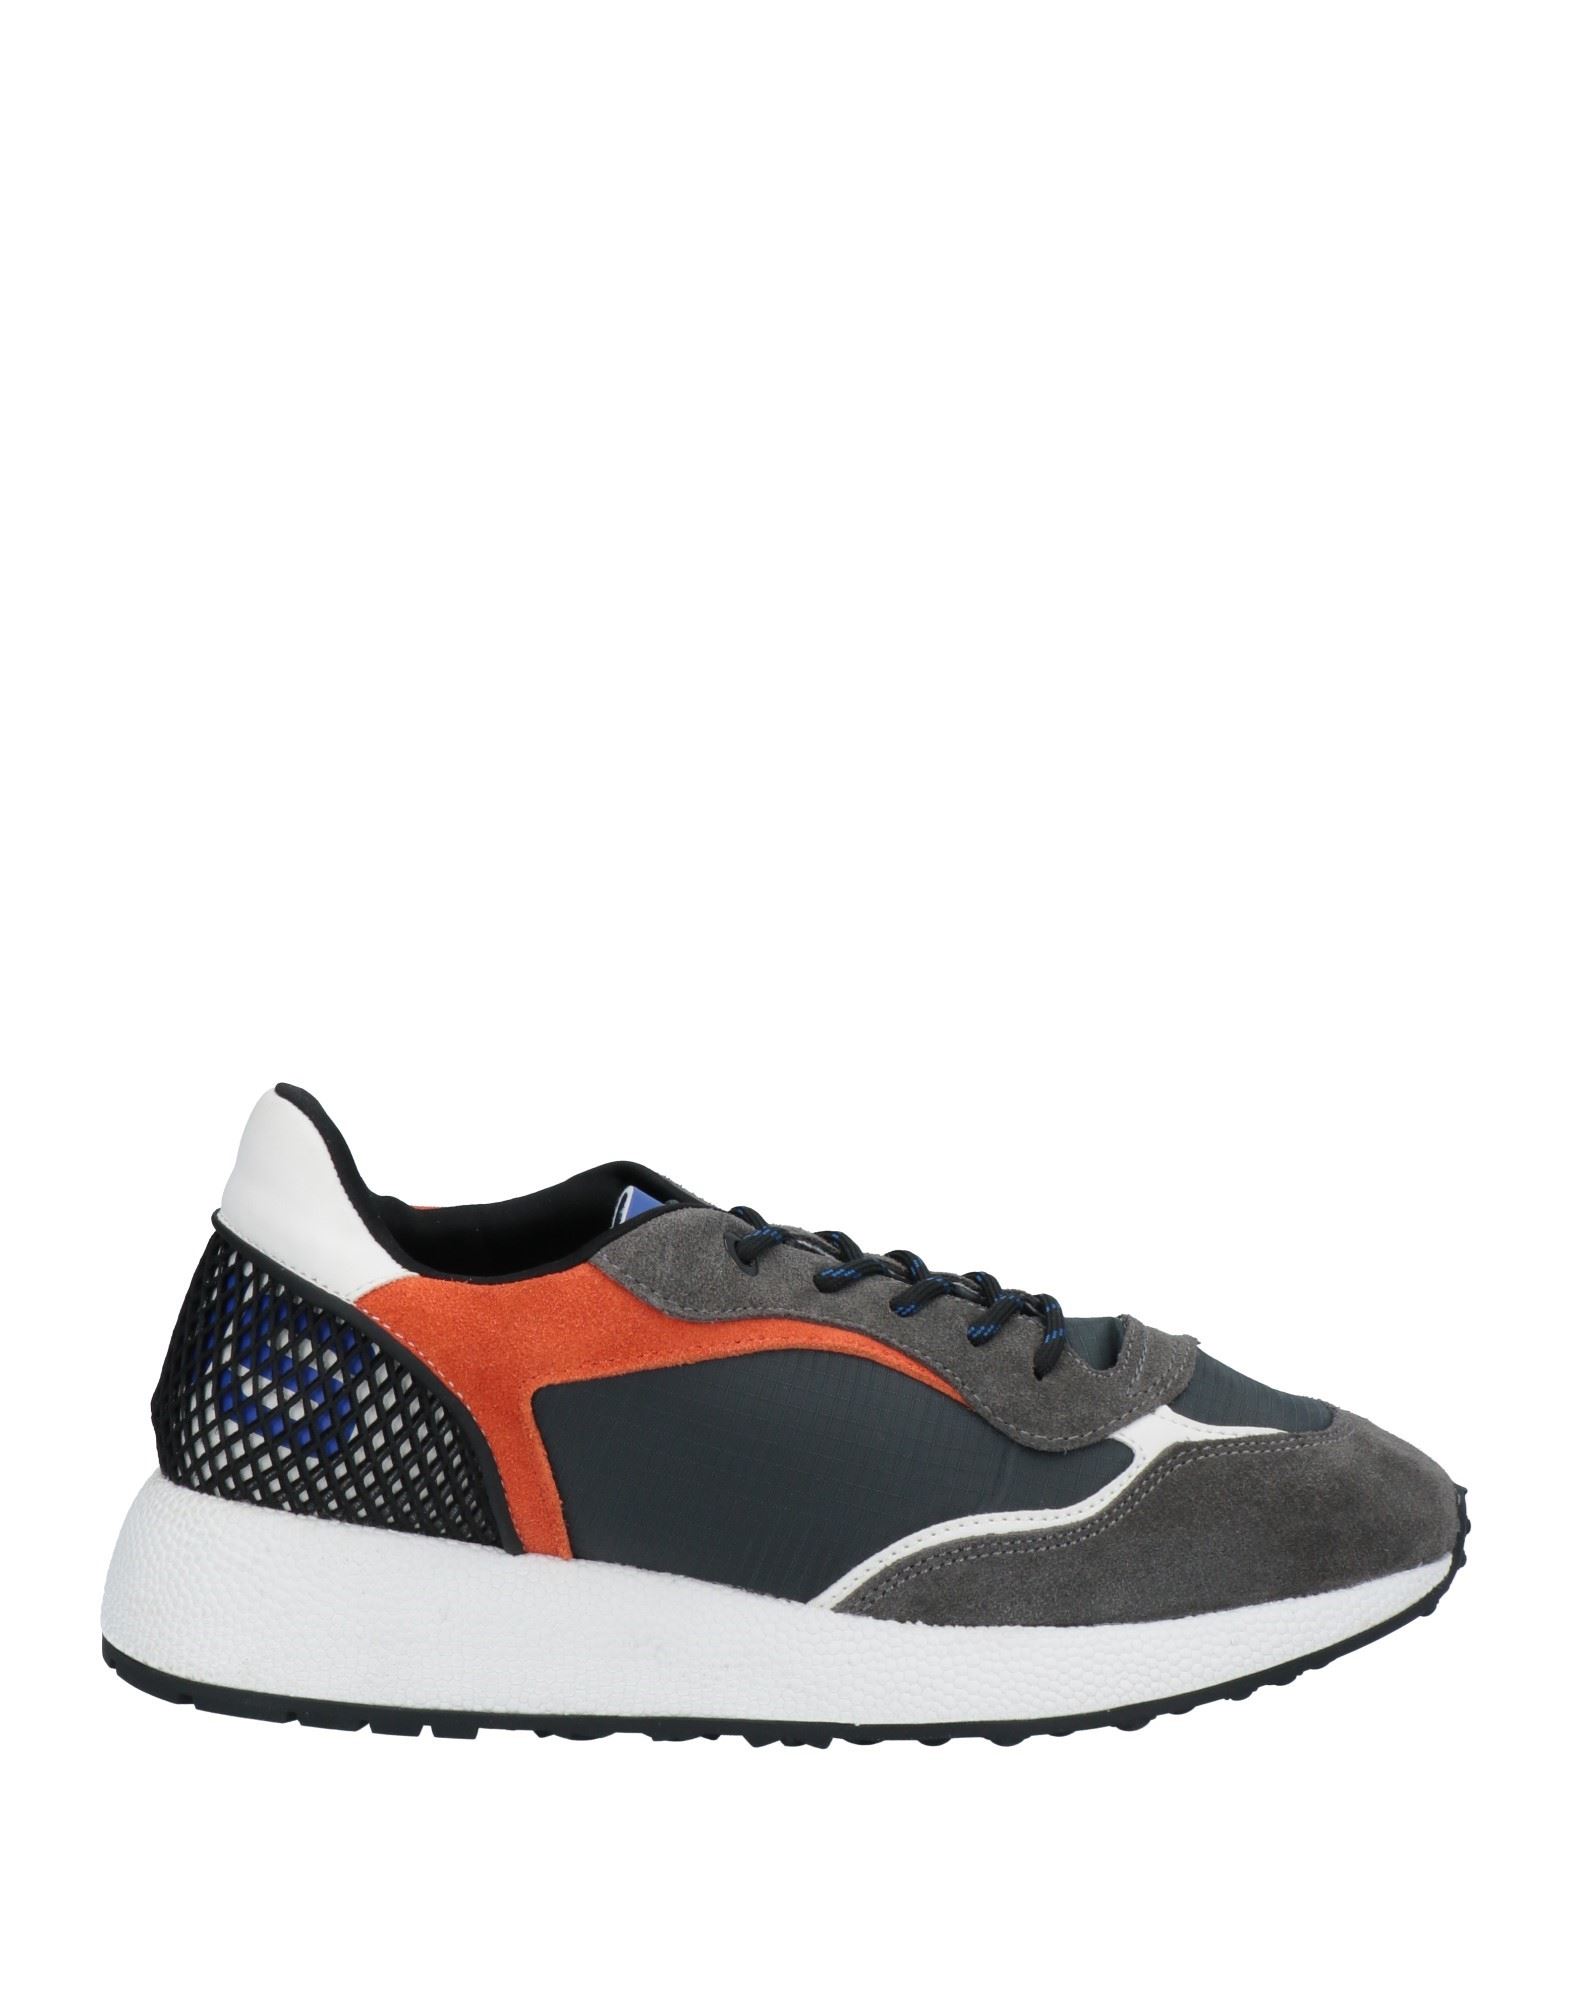 Cesare Paciotti 4us Sneakers In Grey